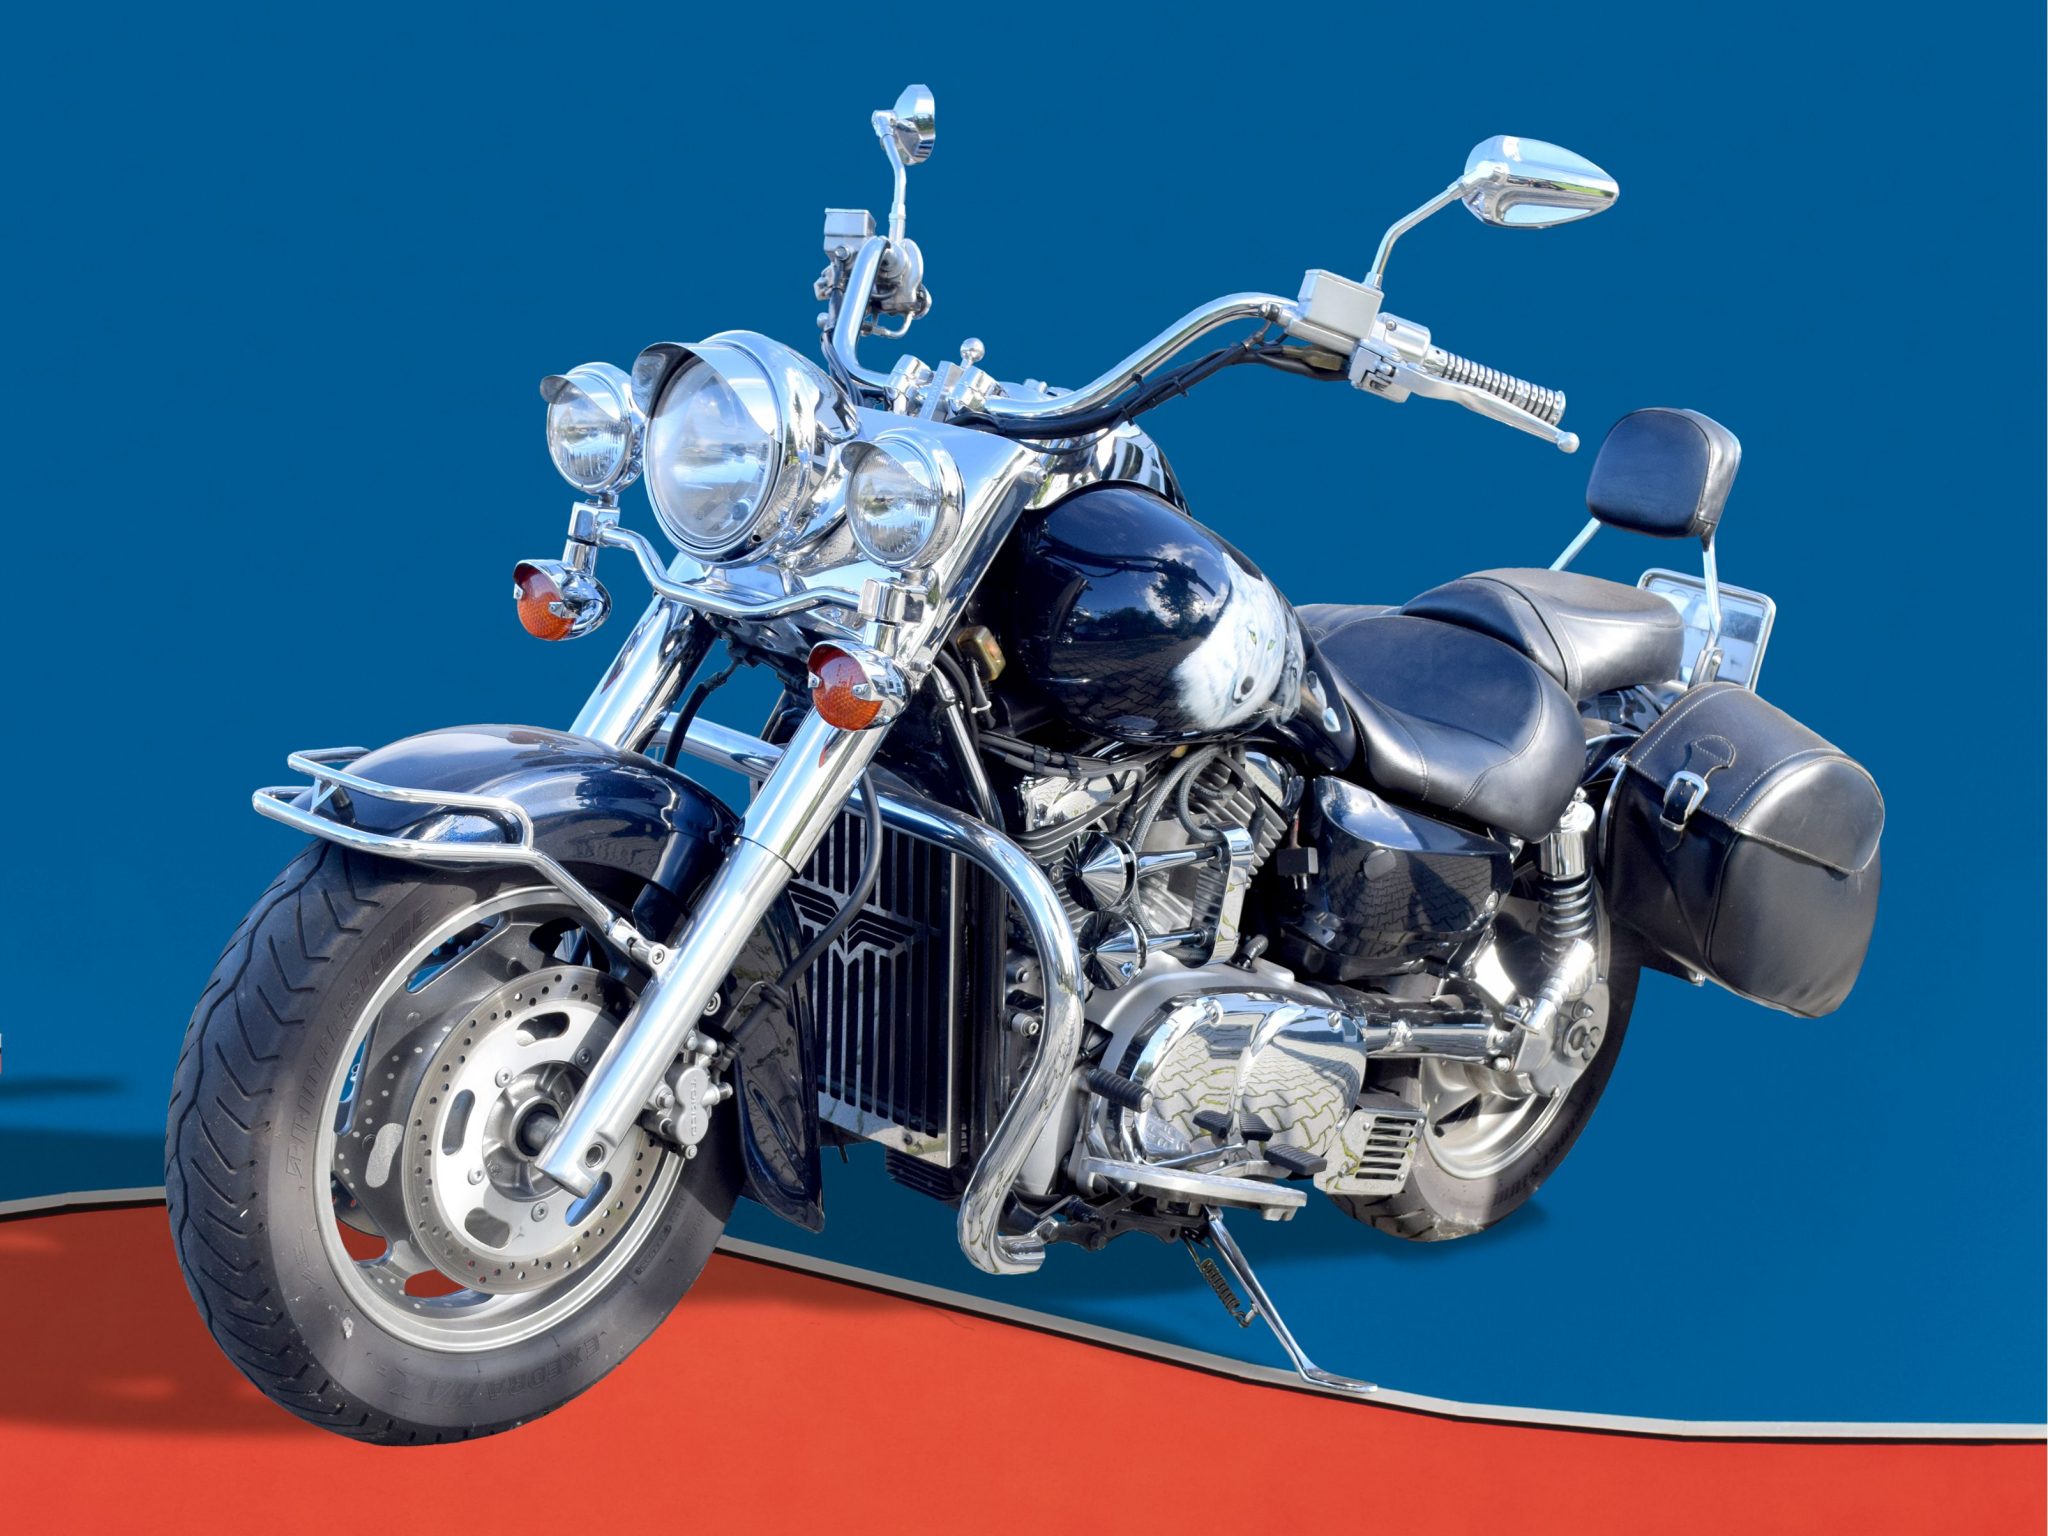 2048x1536 wallpaper Motorbike Blue Dividing Red Ipad Wallpaper 2048x1536 pixels resolution